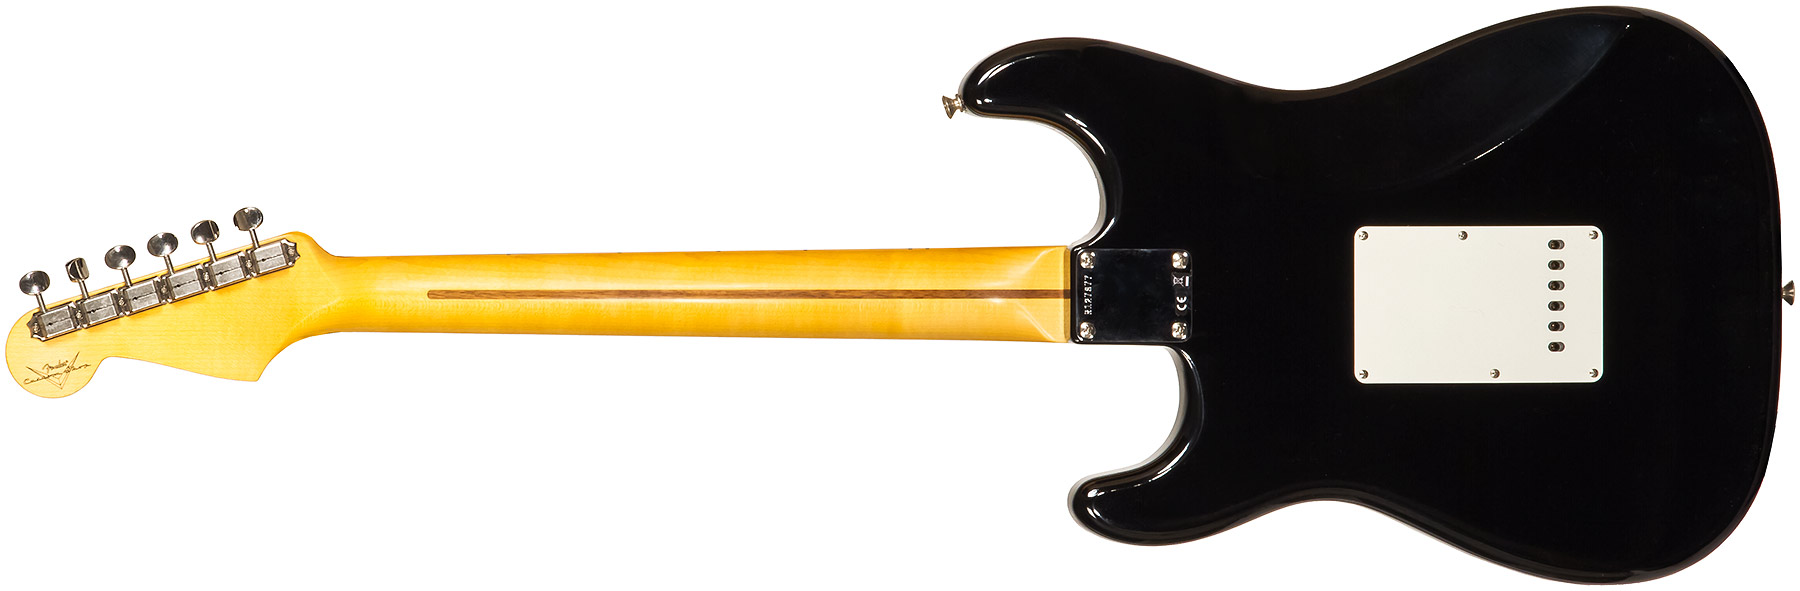 Fender Custom Shop Strat 1955 3s Trem Mn #r127877 - Closet Classic Black - Elektrische gitaar in Str-vorm - Variation 1